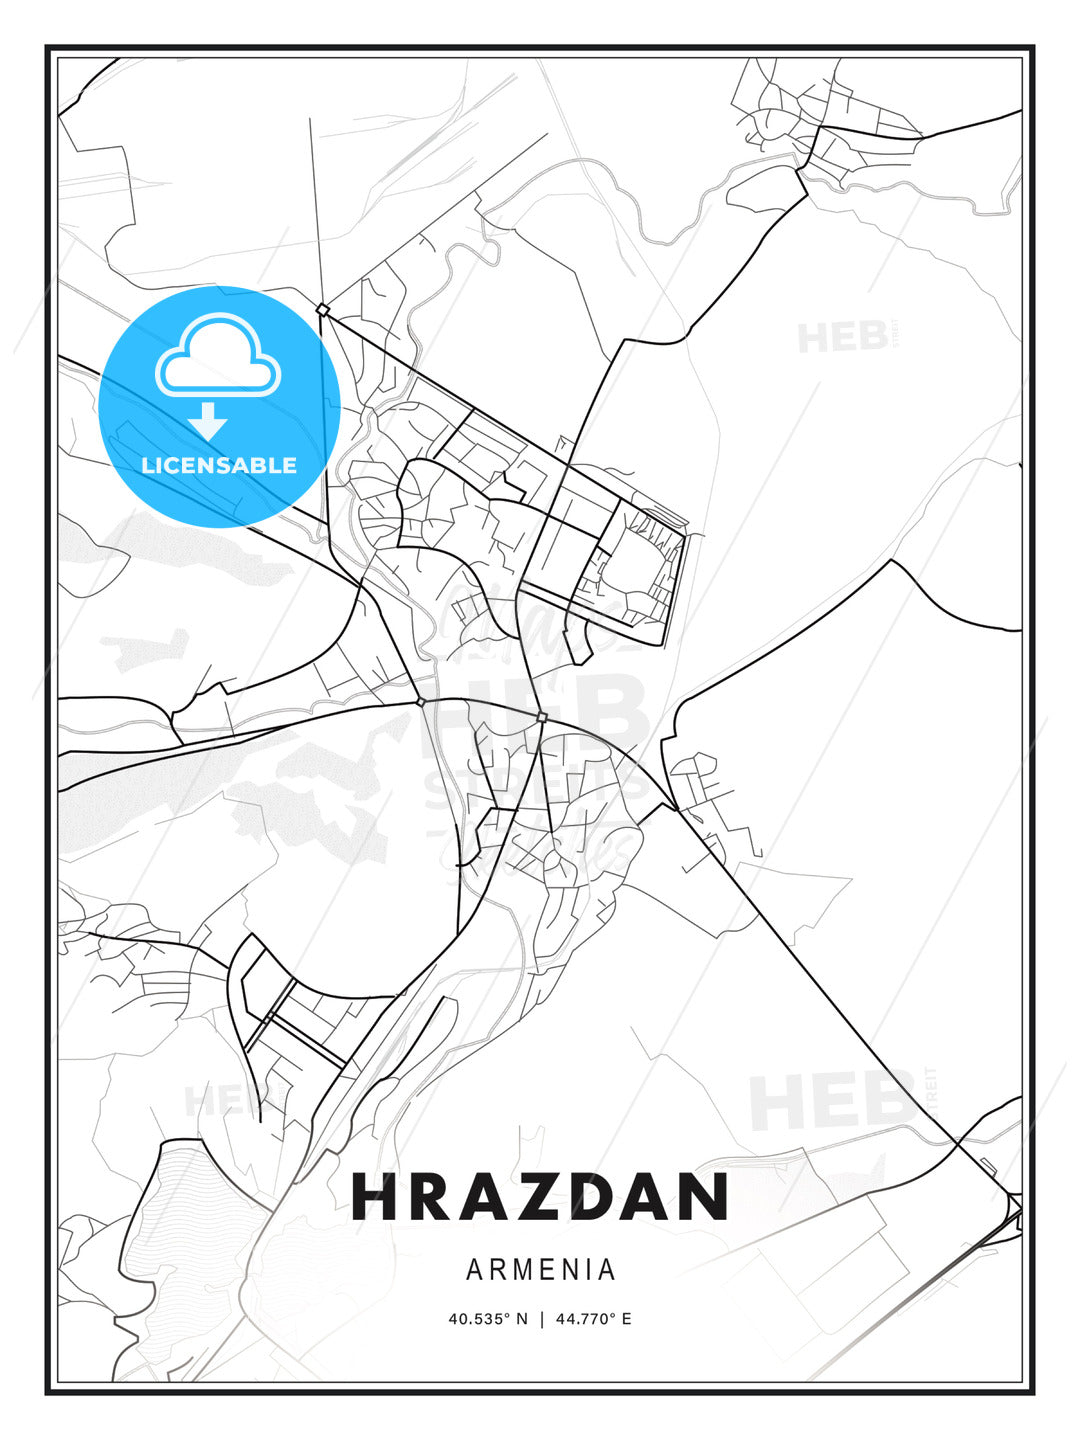 Hrazdan, Armenia, Modern Print Template in Various Formats - HEBSTREITS Sketches